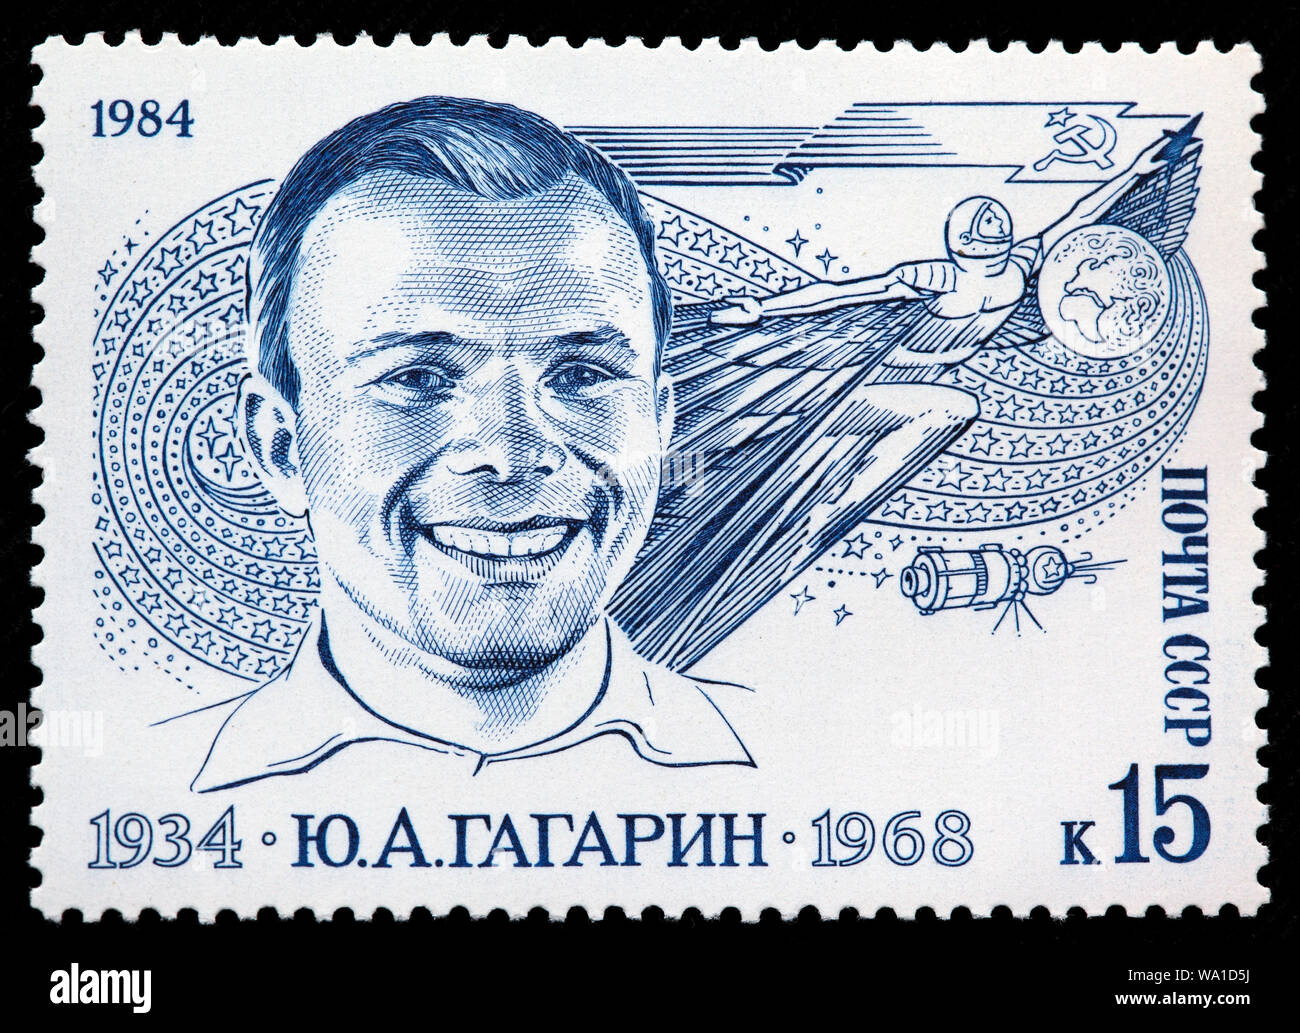 Yuri Gagarin (1934-1968), first cosmonaut, postage stamp, Russia, USSR, 1984 Stock Photo